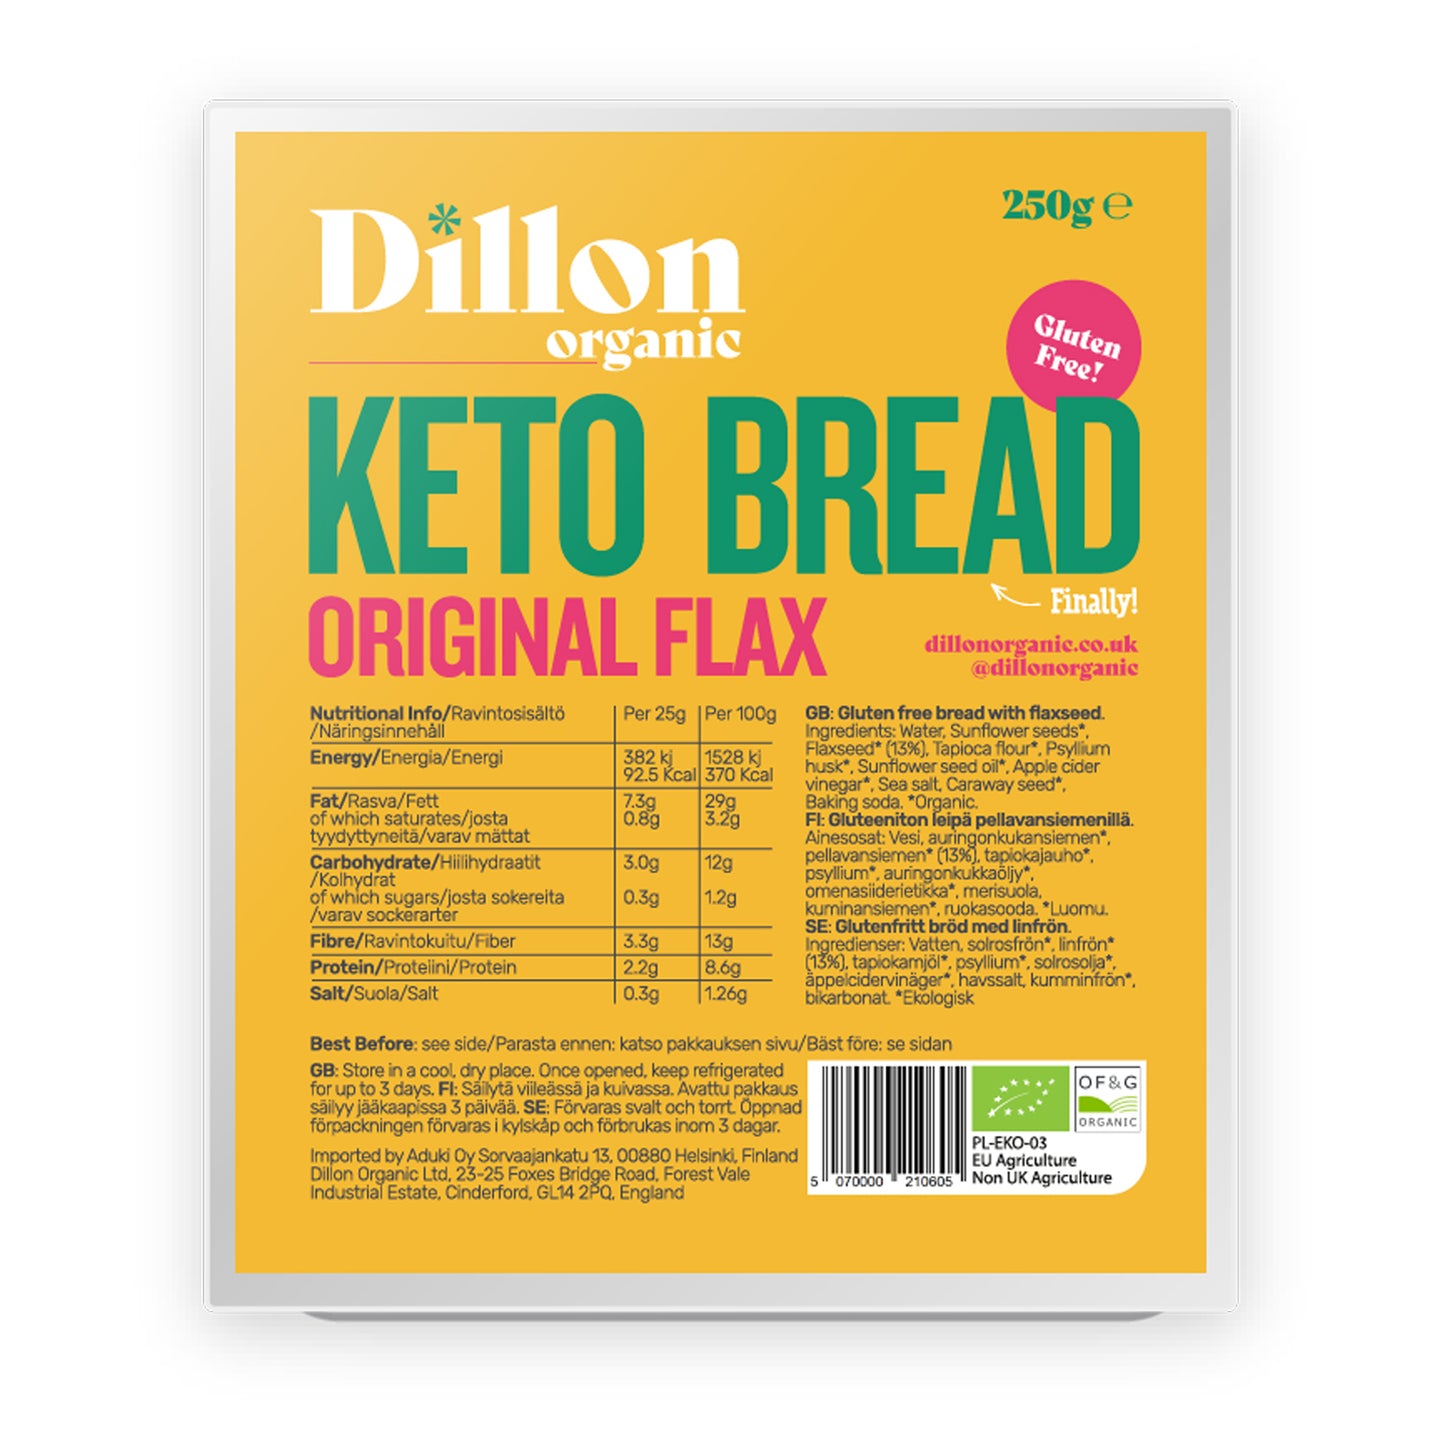 Original Flax Keto Bread 250g